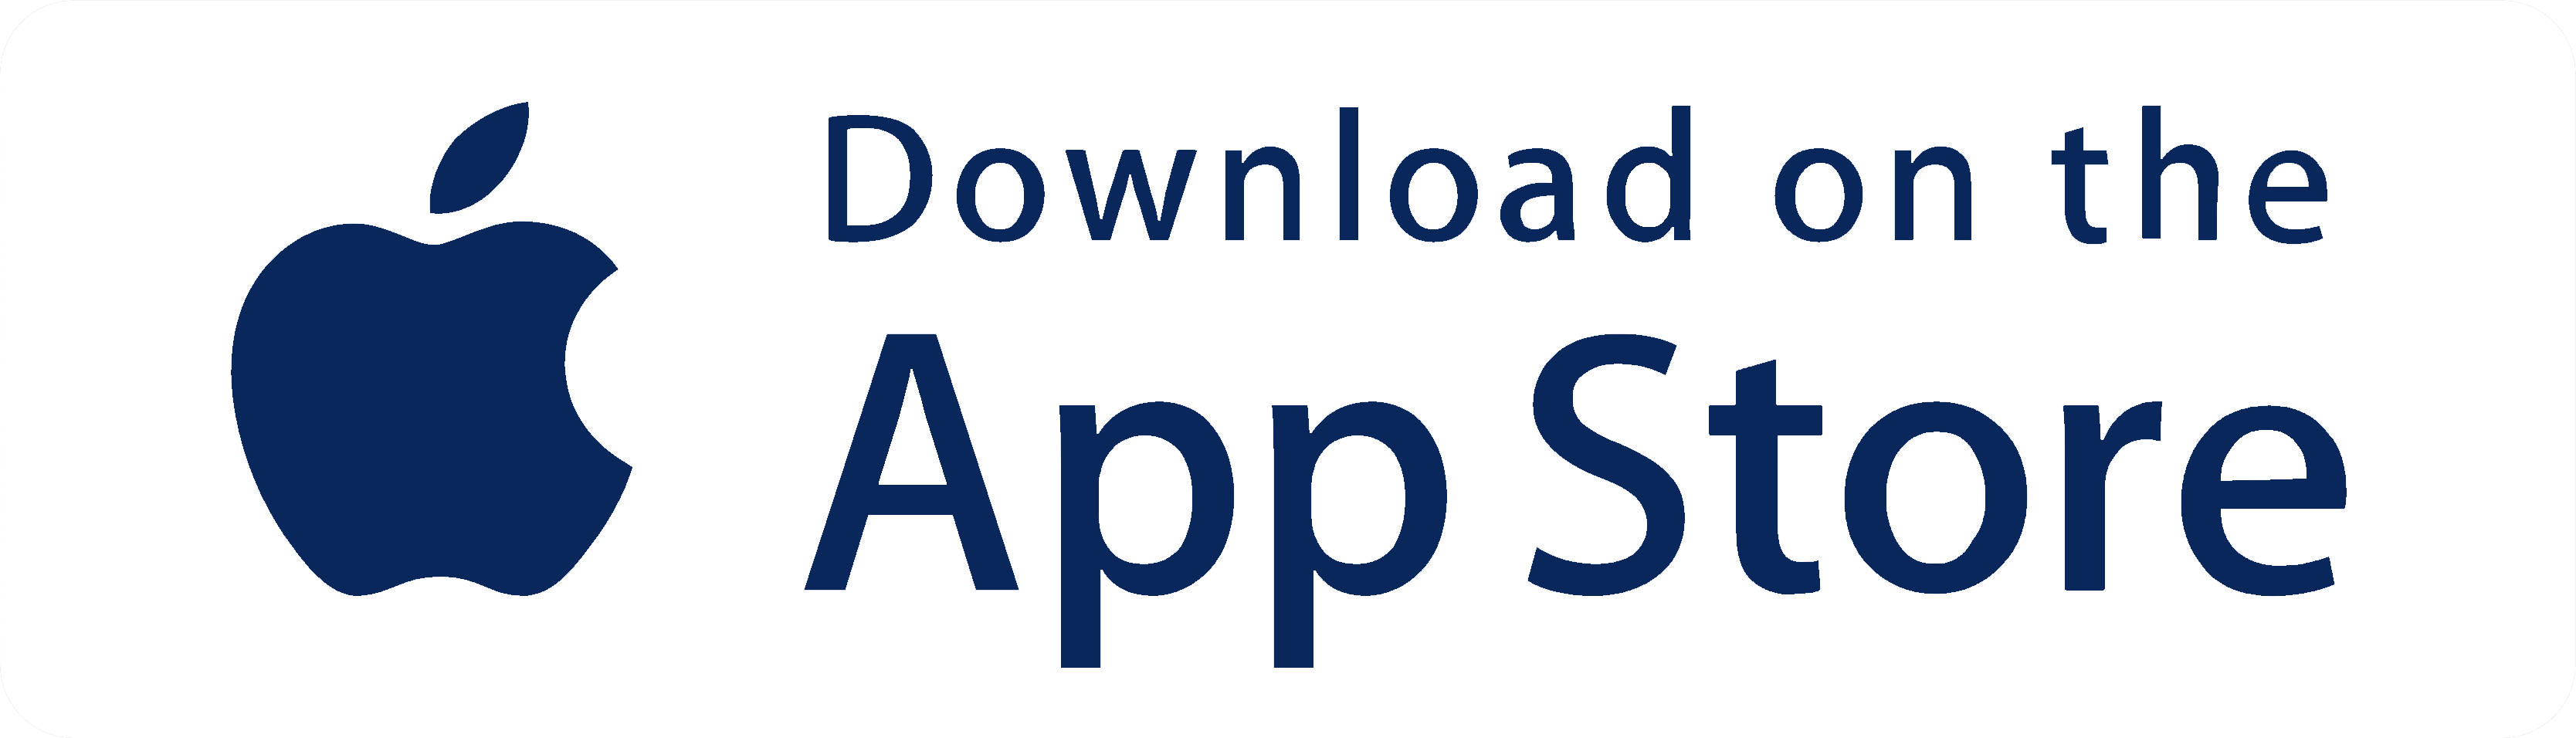 Download Turkey Homes app in Applestore